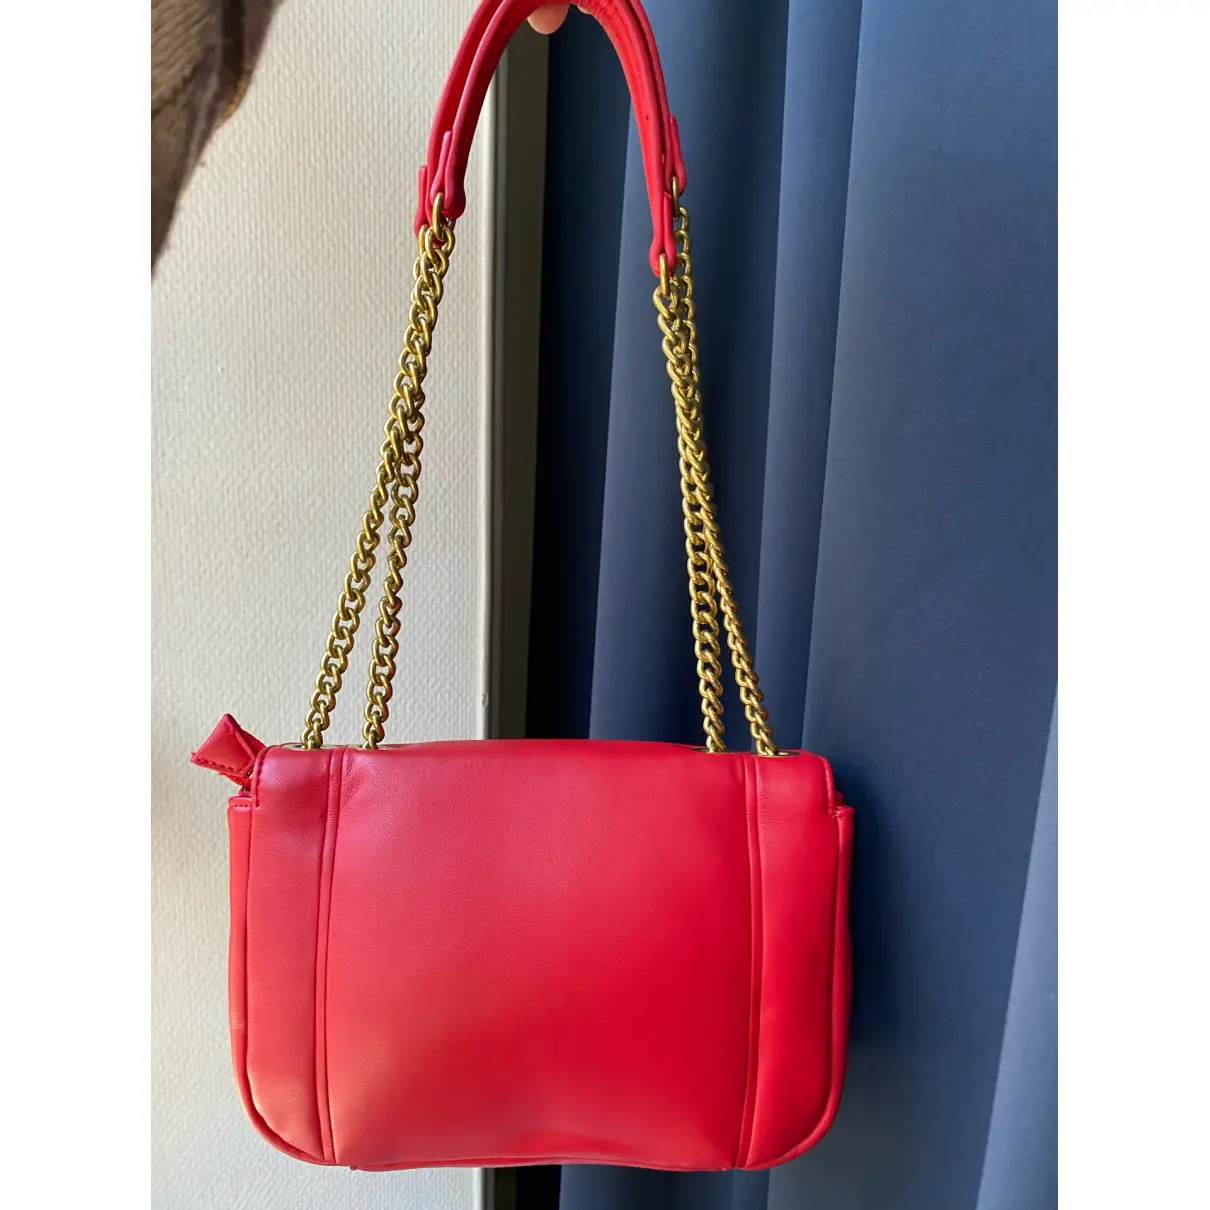 Buy Valentino by mario valentino Leather handbag online